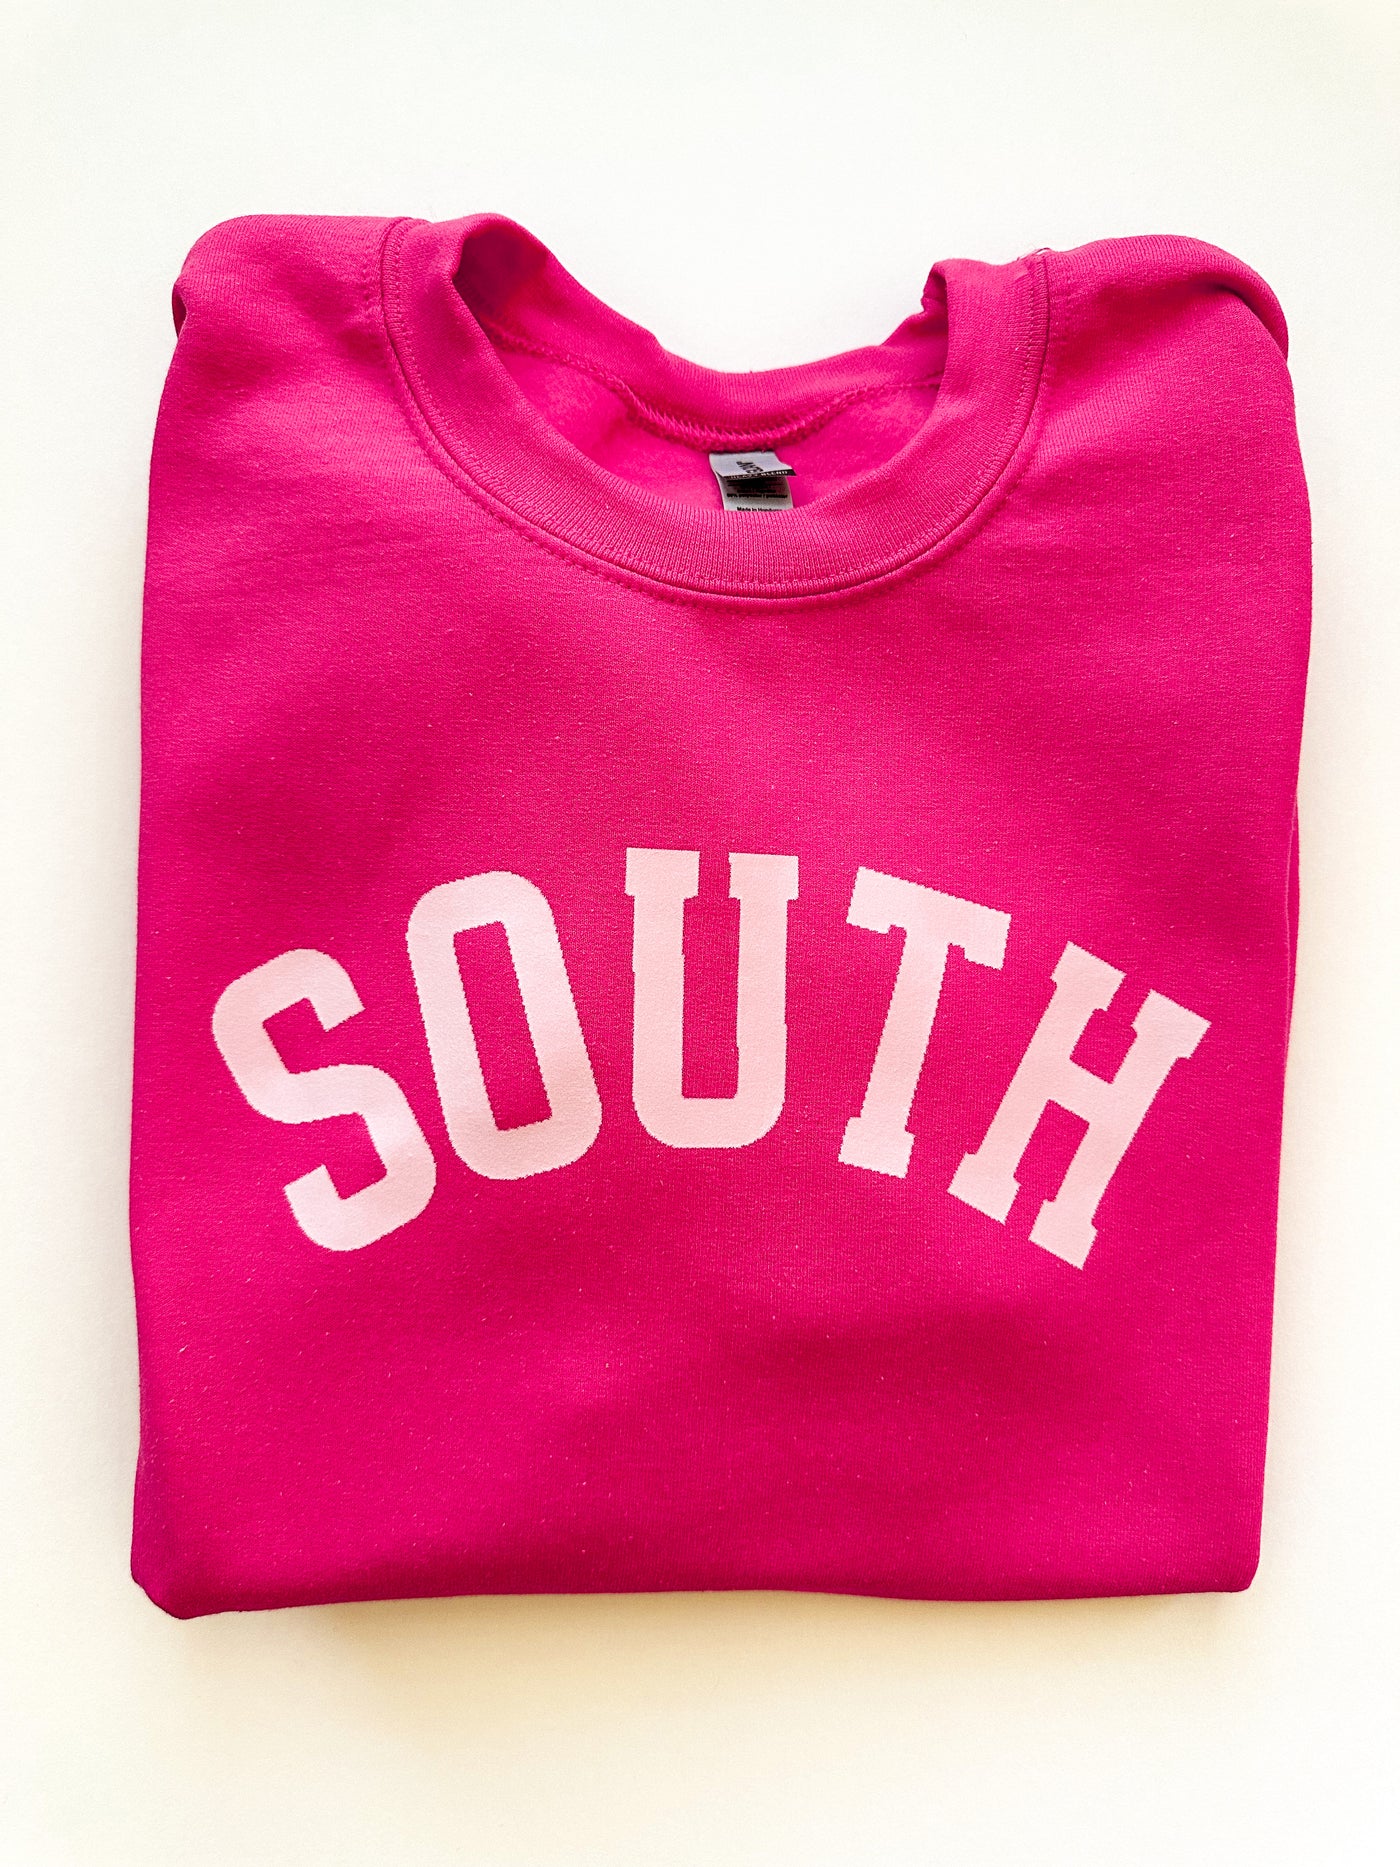 "SOUTH" Sweatshirt - Pink